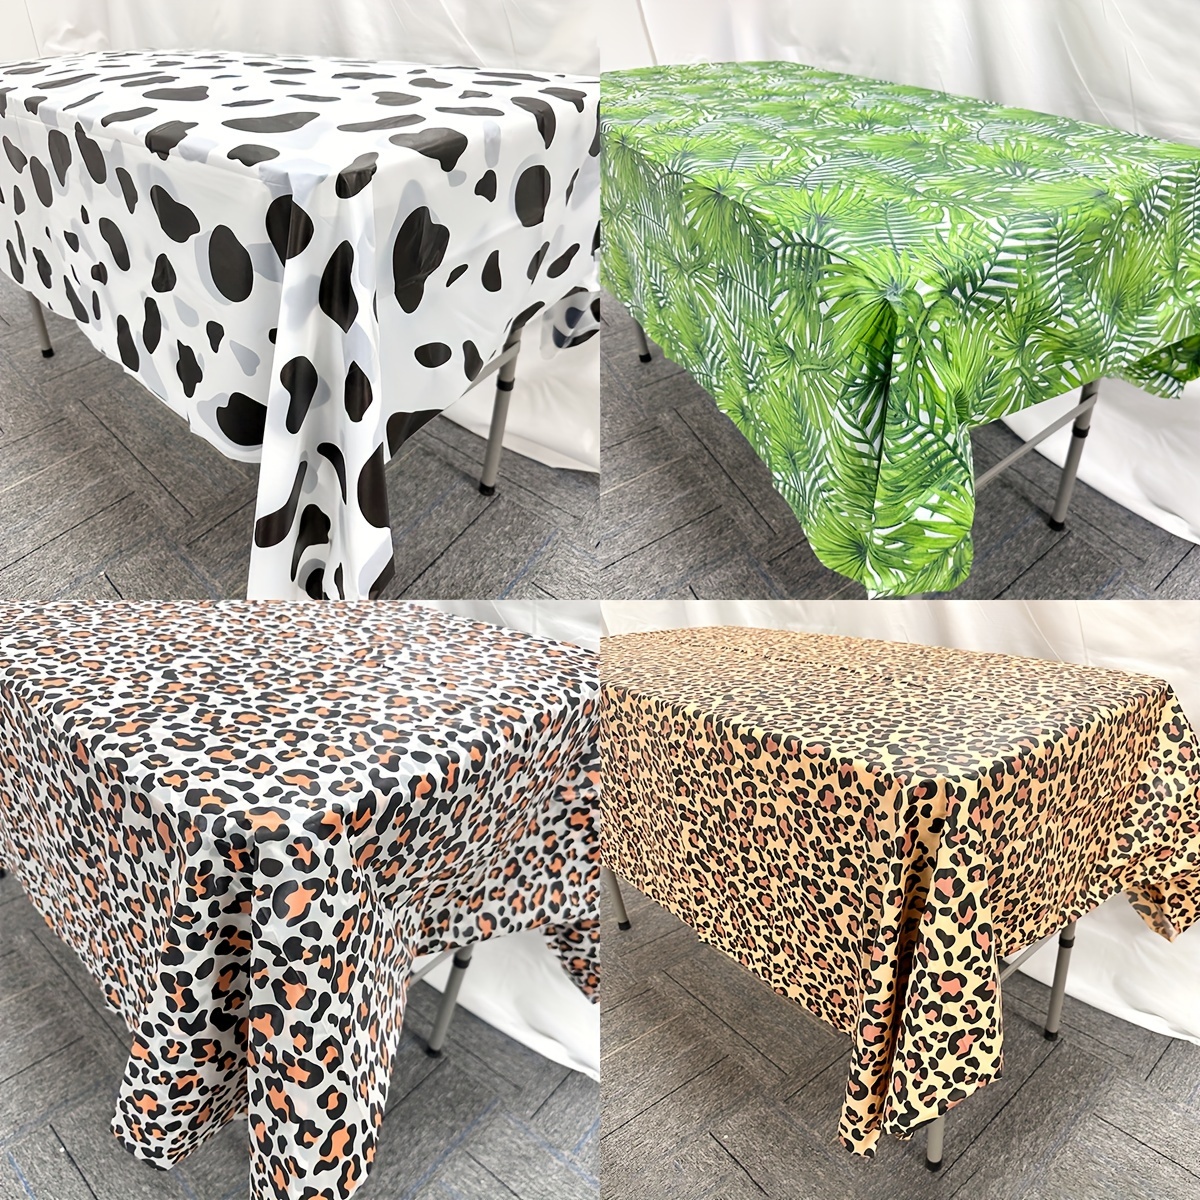 

nature's Banquet" Jungle Tablecloth - Leopard, Cow & Deer Prints, 54"x108", Easy Clean